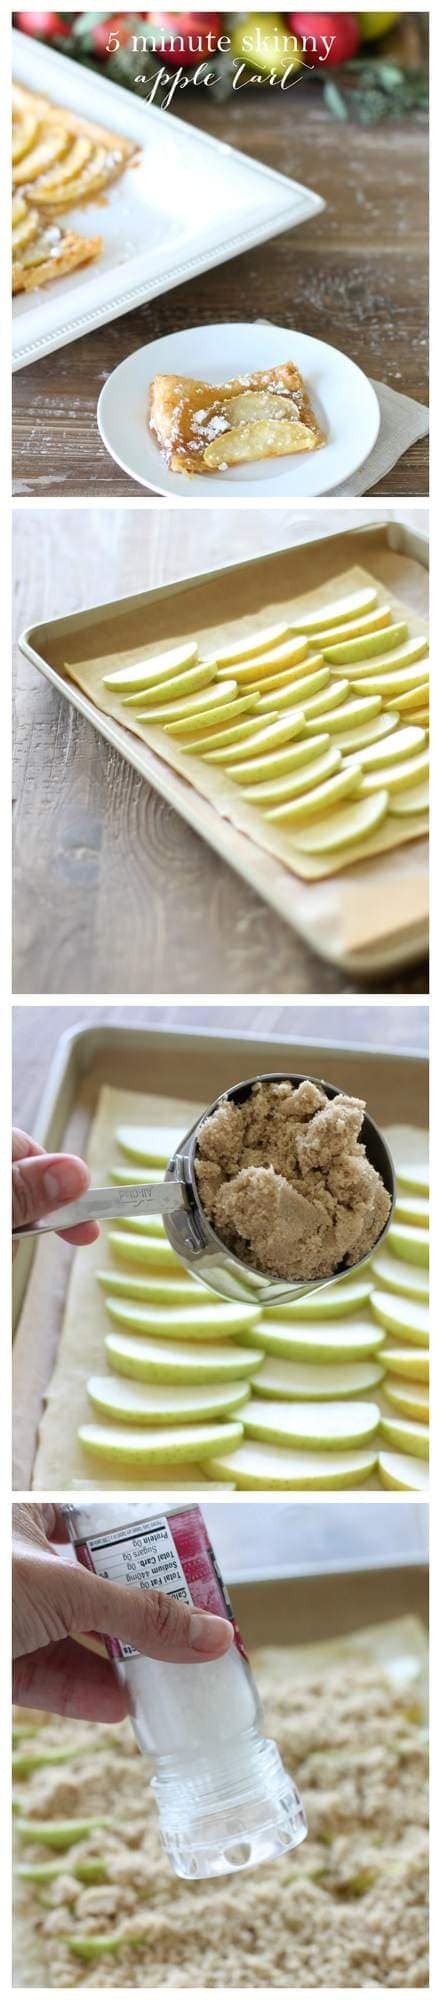 Pinterest collage of making the apple tart